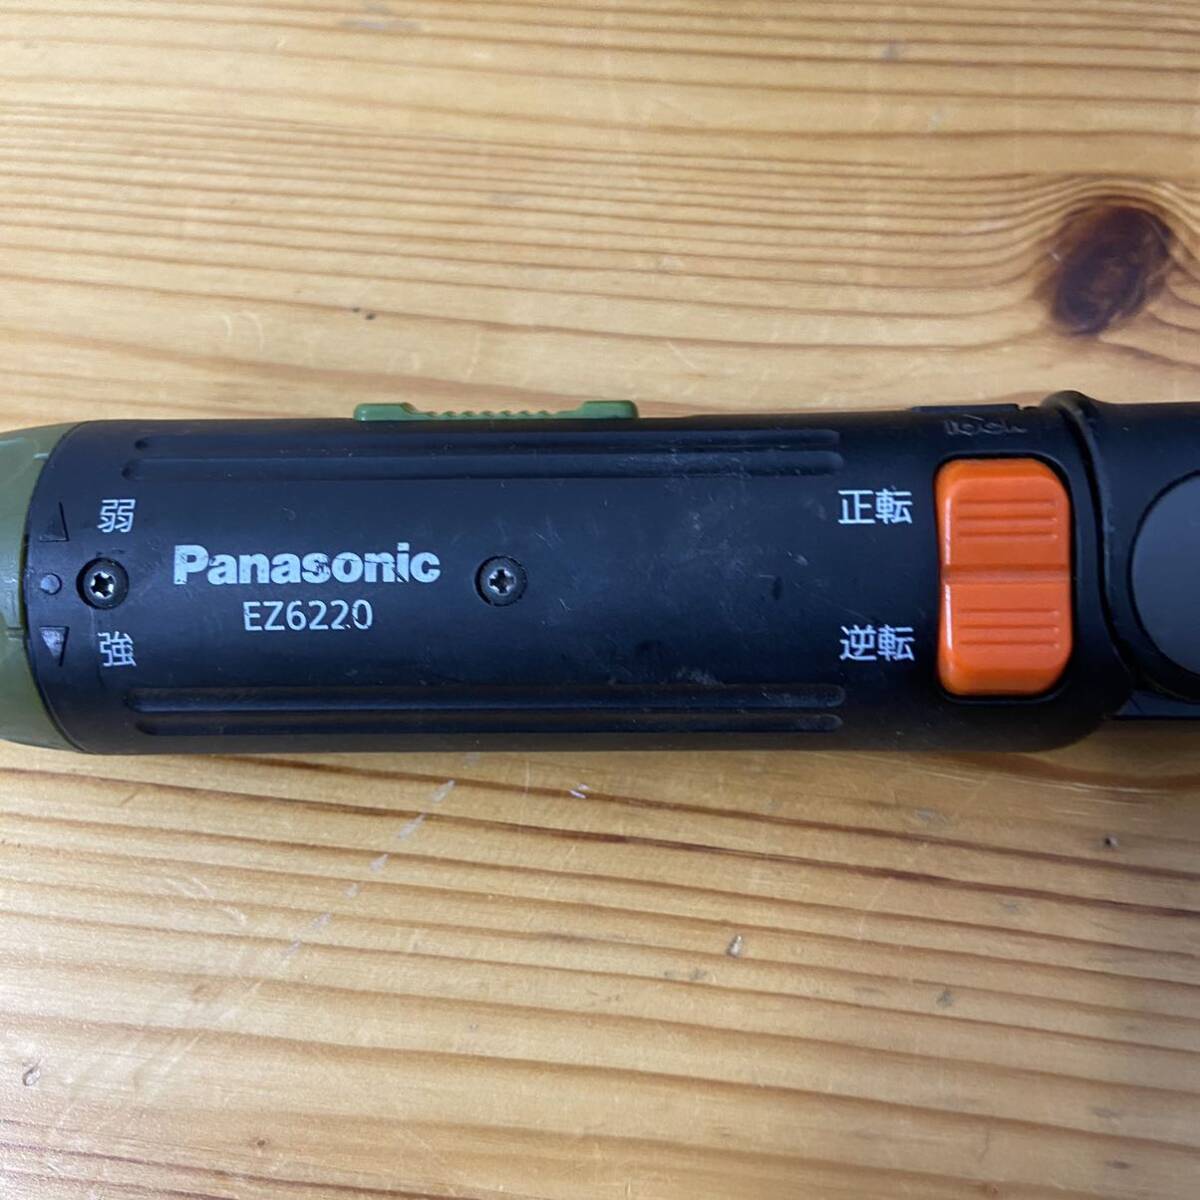 UTn845 Panasonicパナソニック ドリルドライバー EZ6220X EZ0L11 EZ6934 バッテリー、バッテリー充電器、ケース付き 簡易動作確認済み_画像4